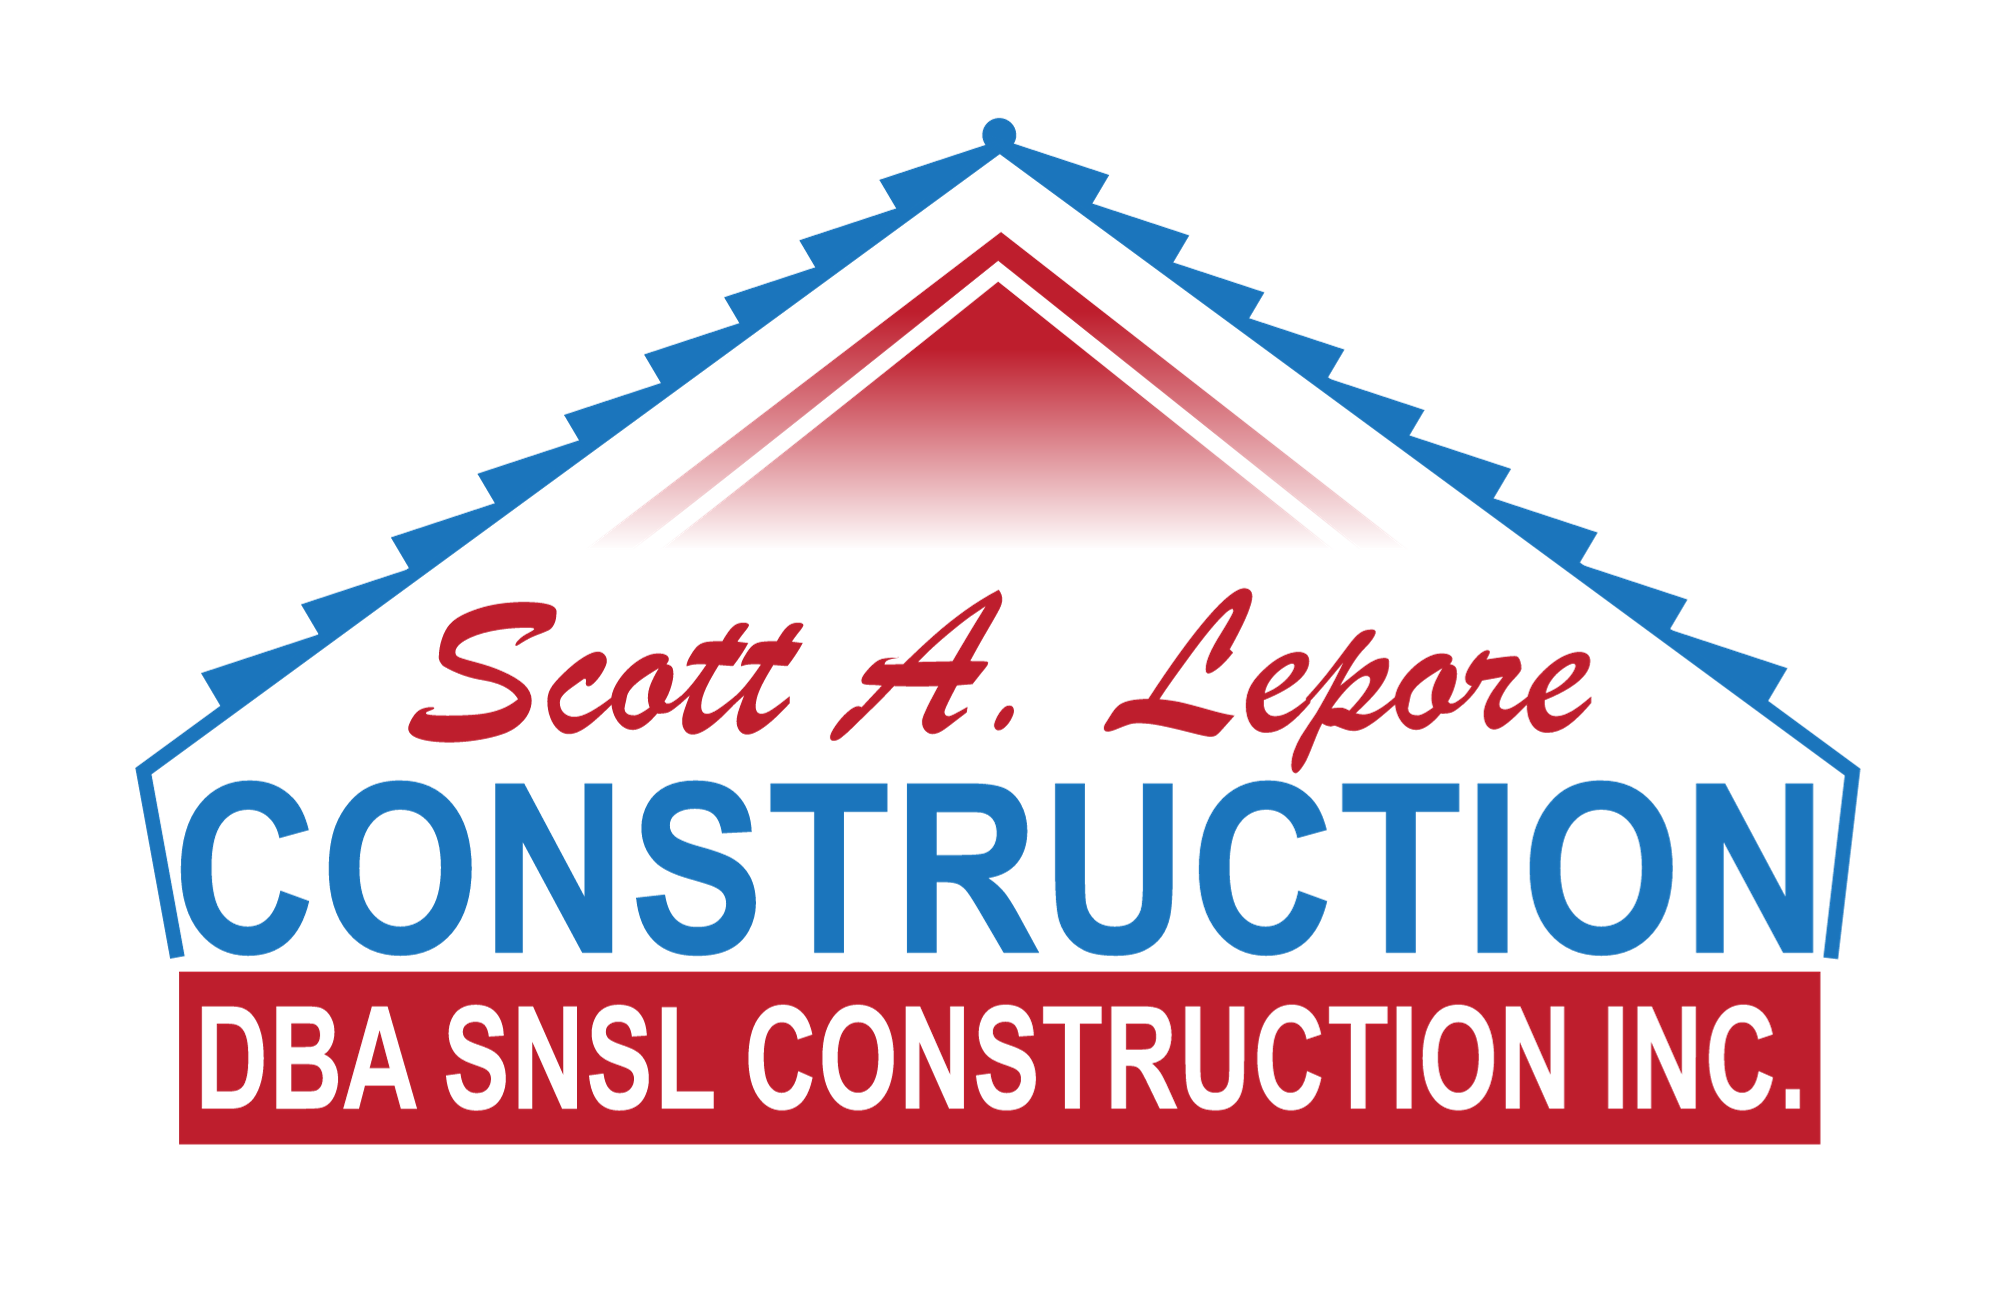 DBA SNSL Construction Inc. 